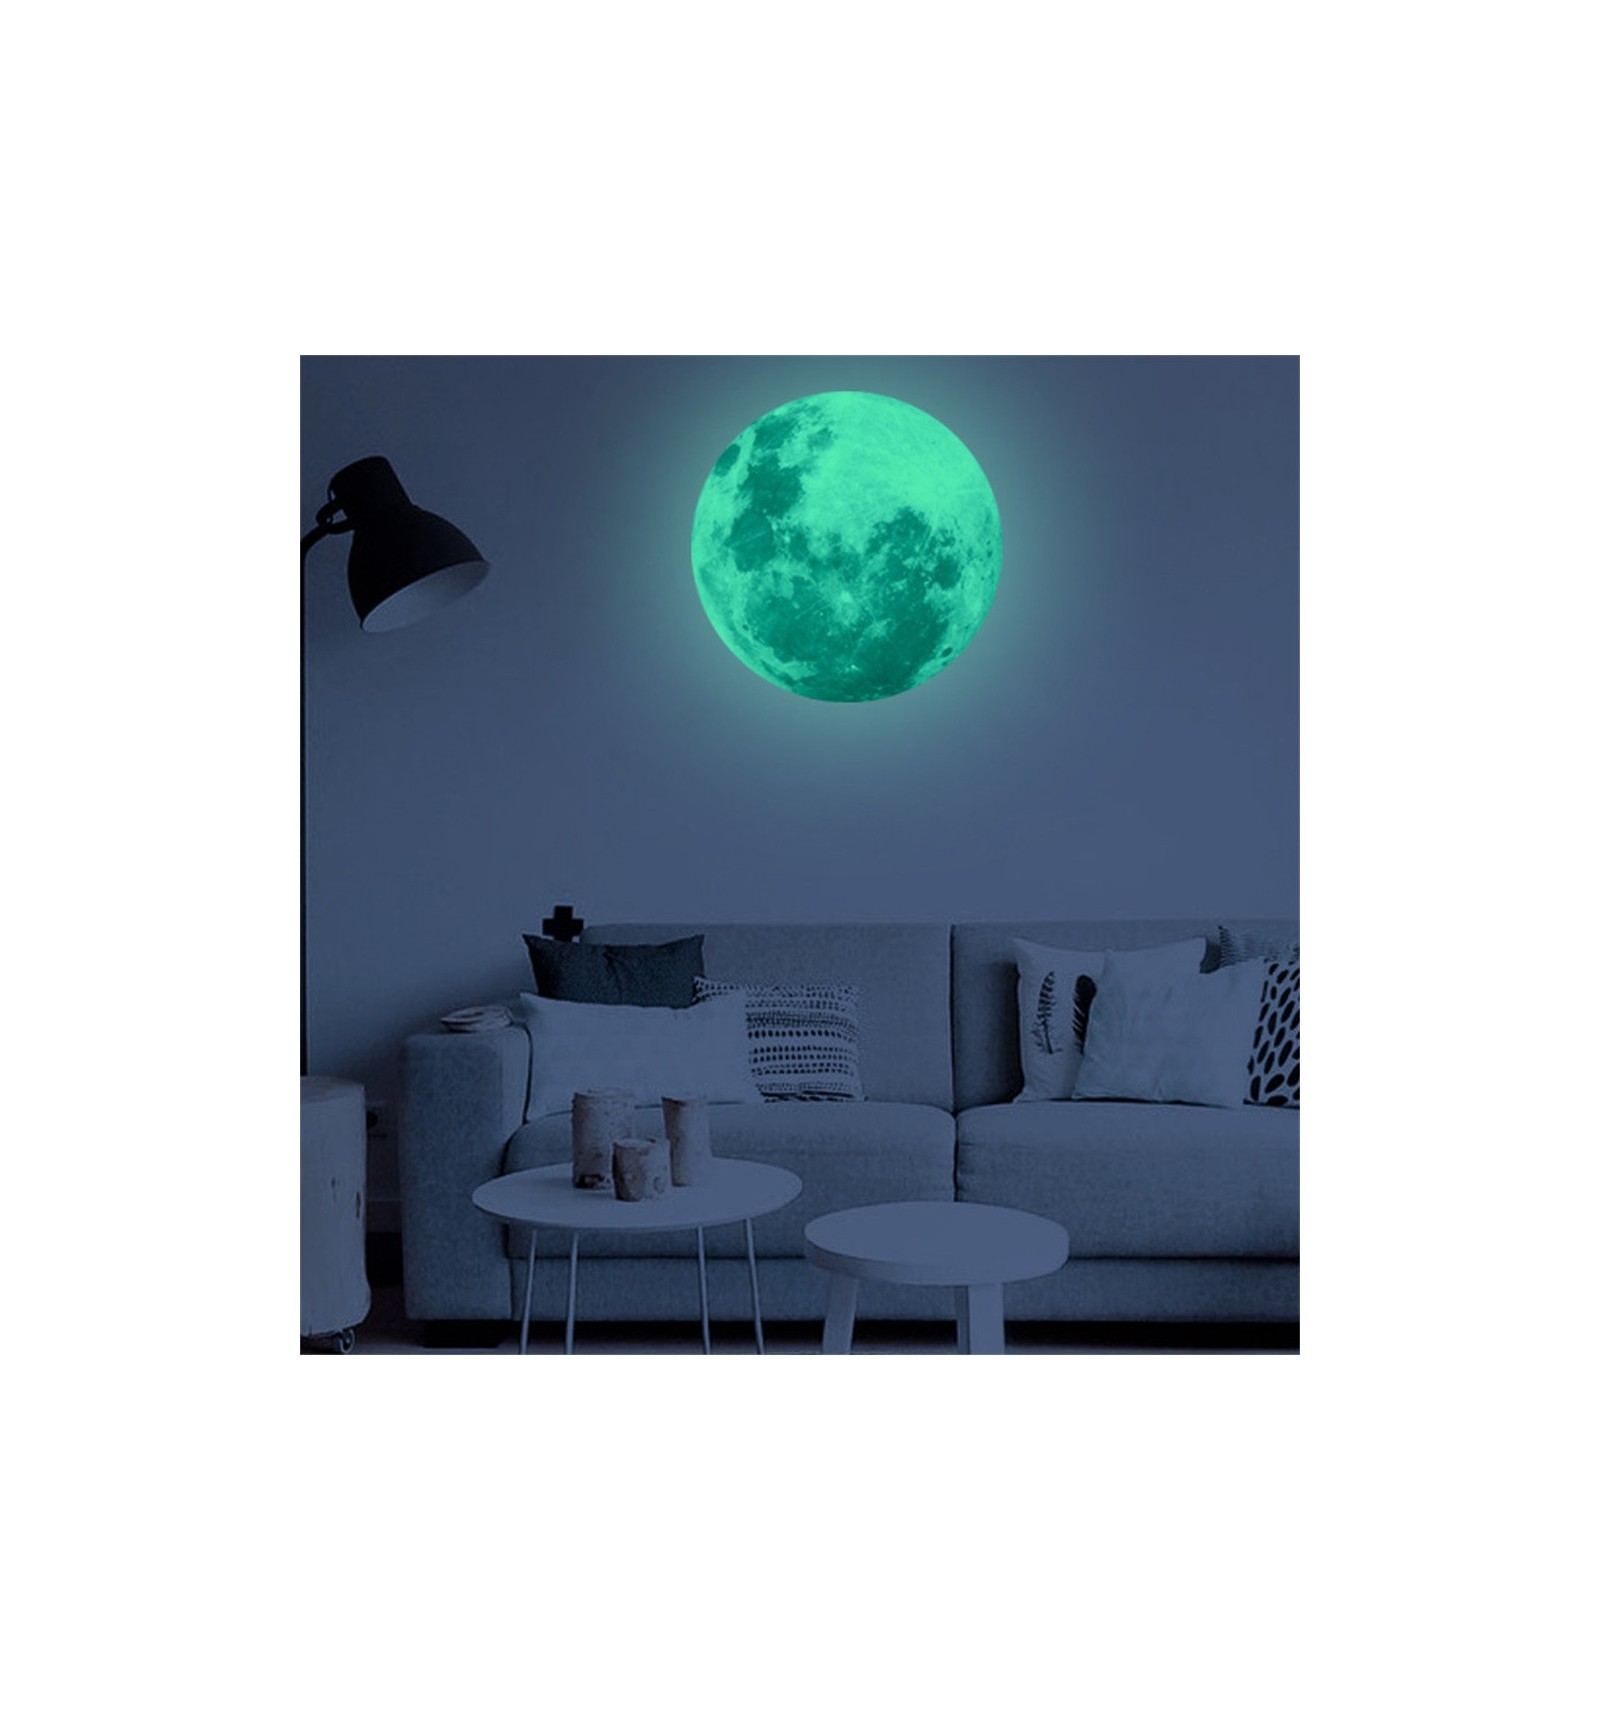  Phosphorescent  fluorescent glow in the dark full moon sticker 